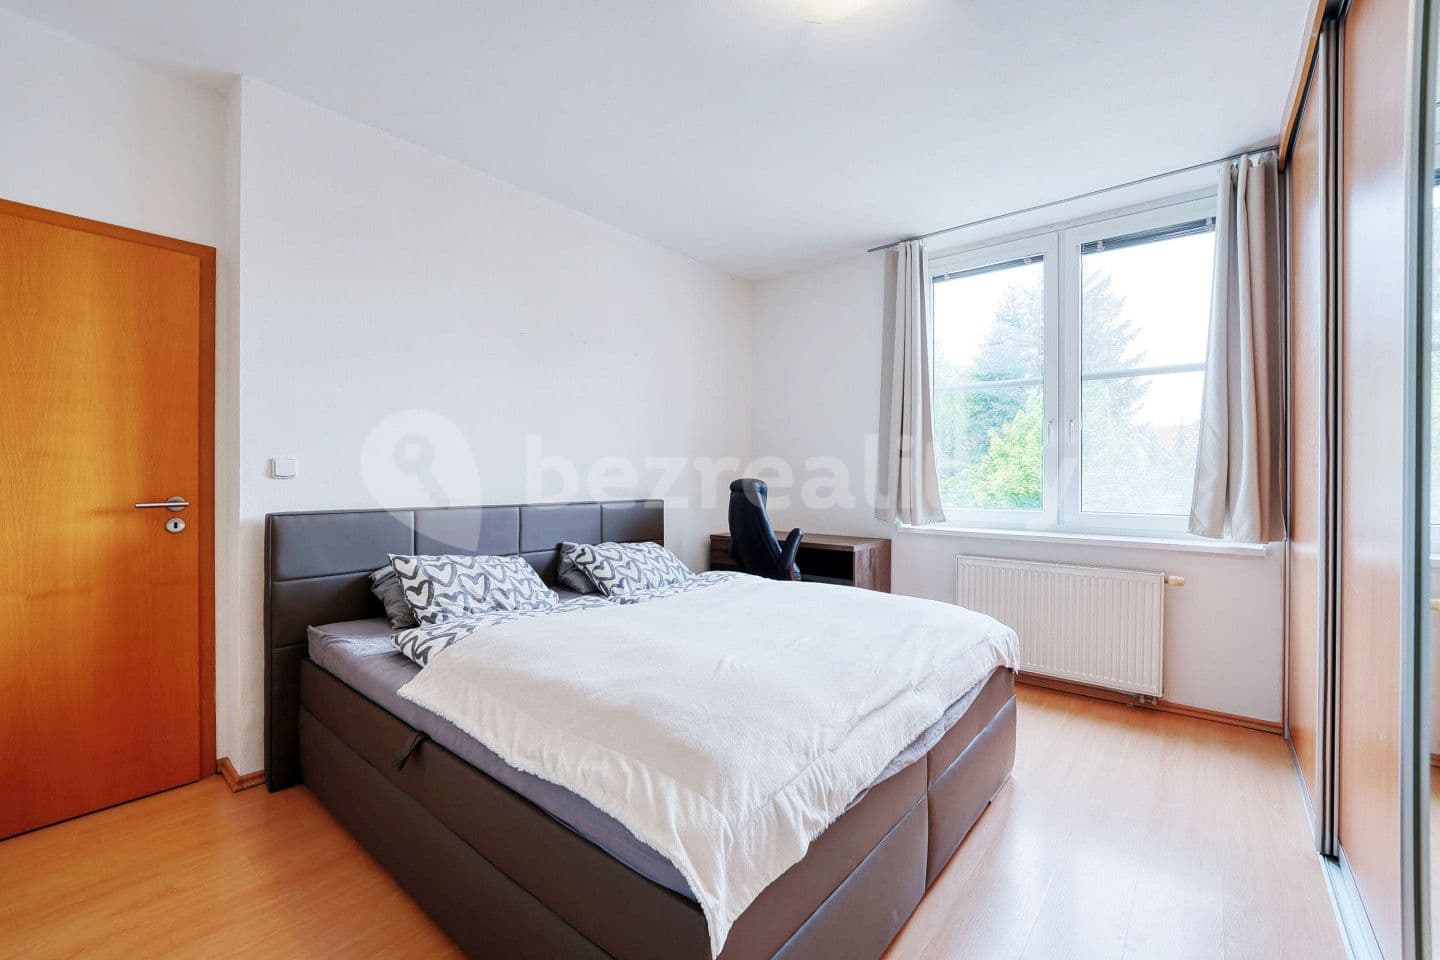 2 bedroom with open-plan kitchen flat for sale, 102 m², Studentská, Plzeň, Plzeňský Region